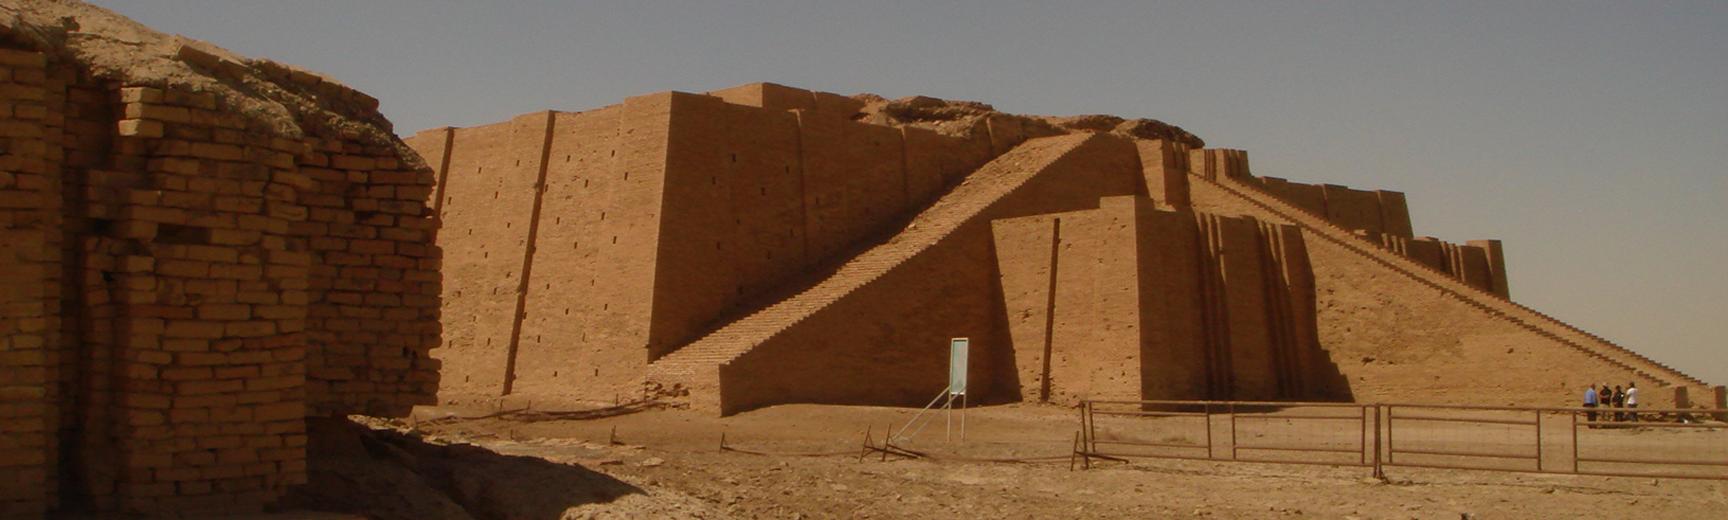 The ziggurat at Ur Southern Iraq owning the past exhibition 2021 Mesopotamia Iraq